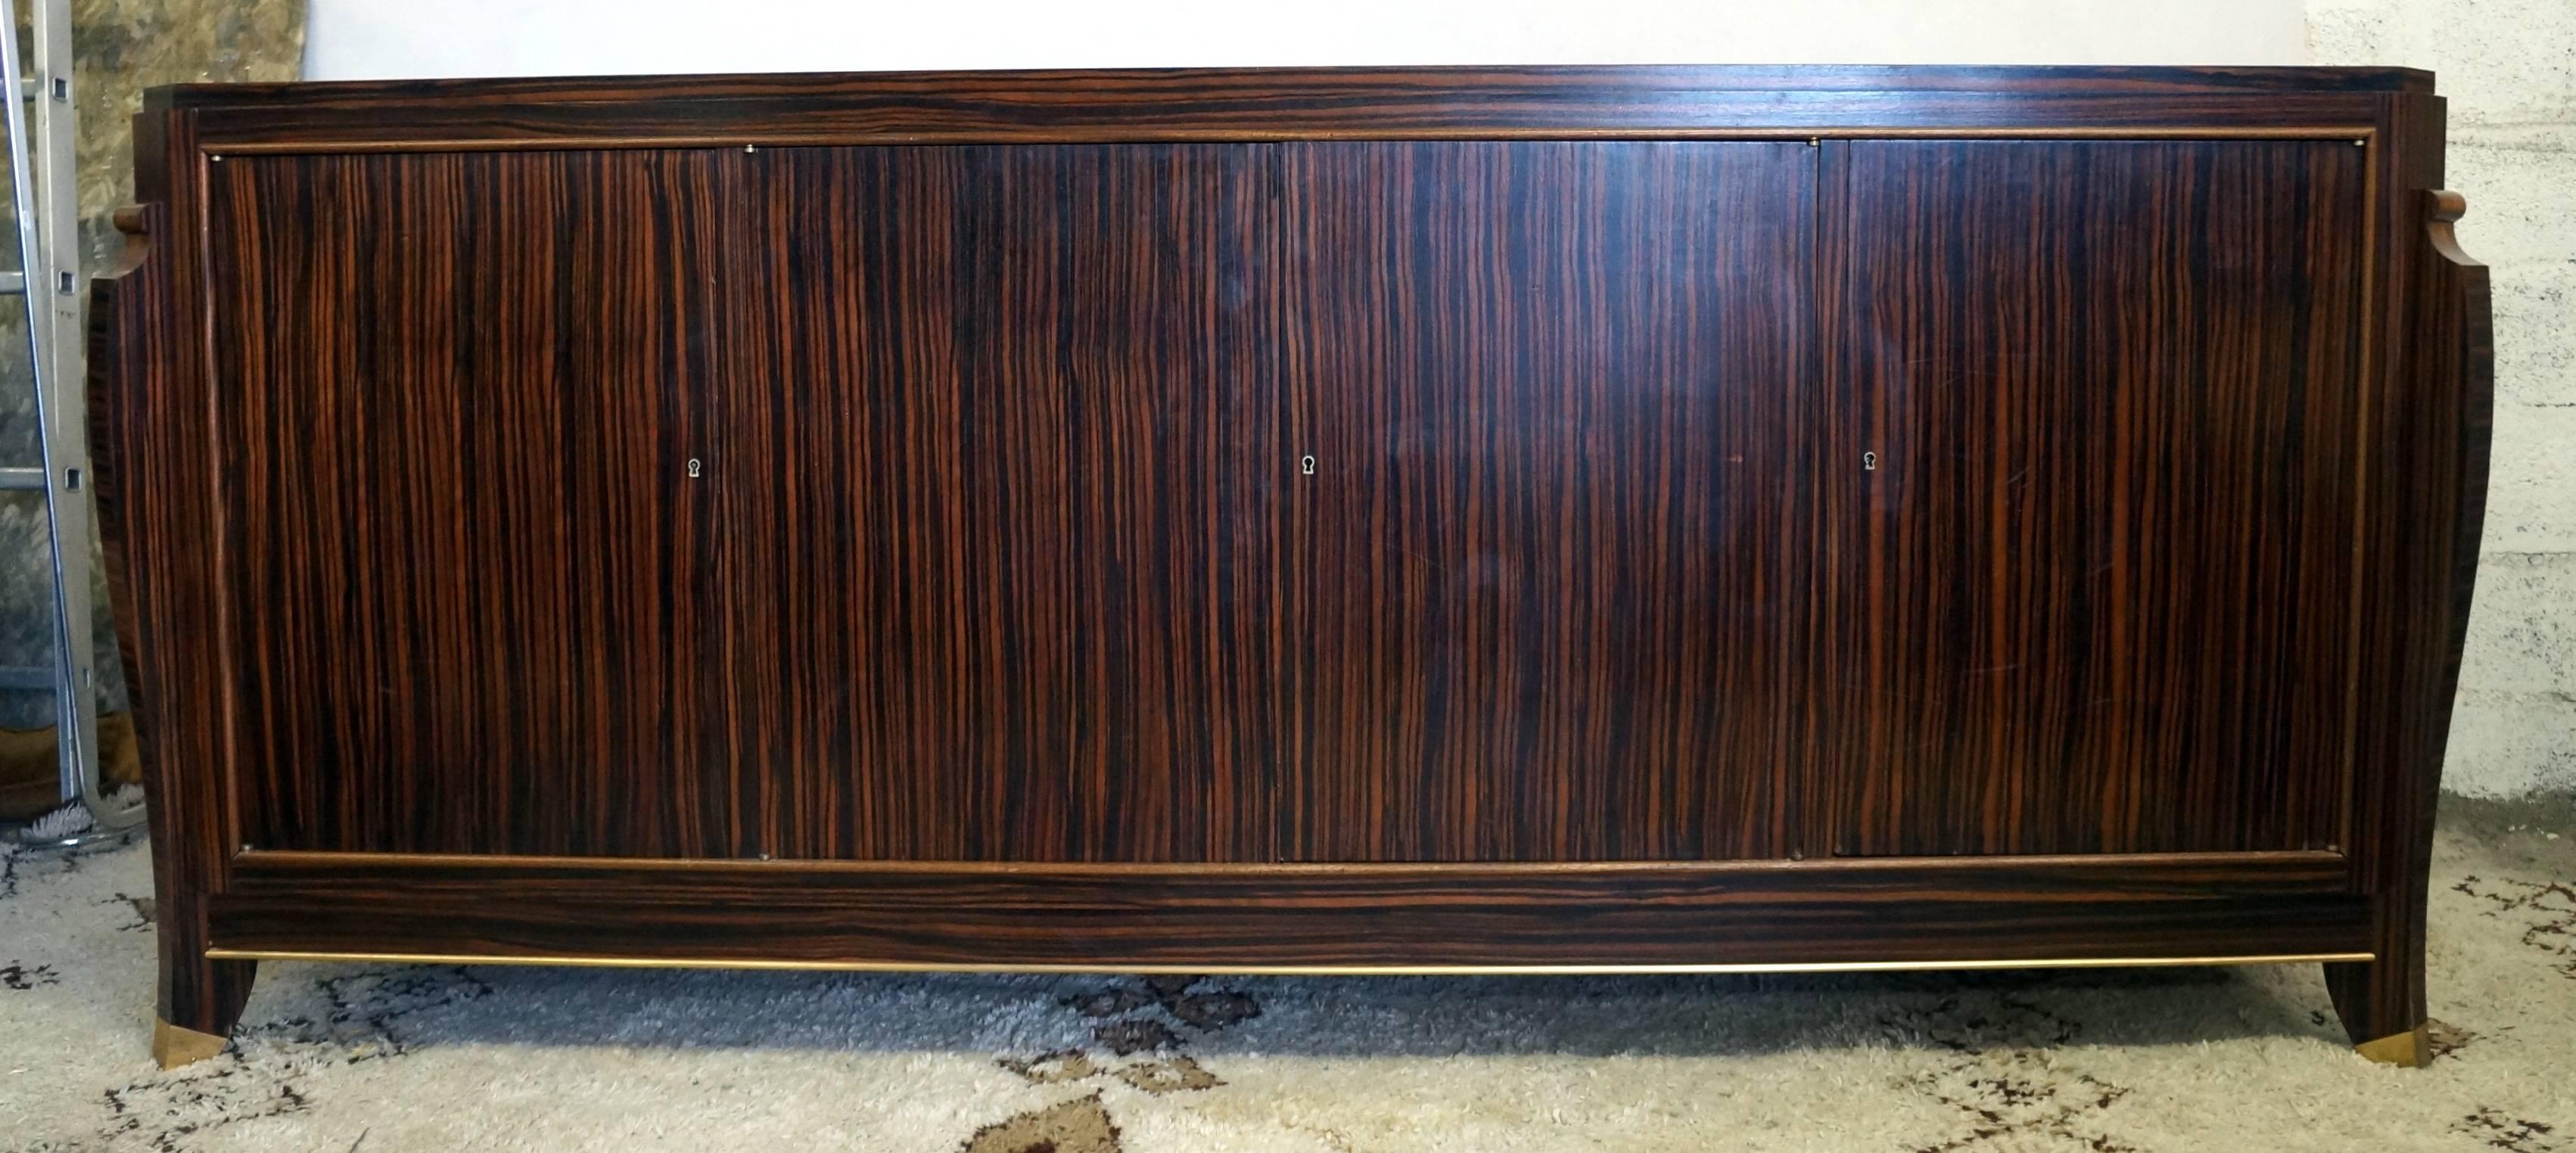 Beautiful Macassar Art Deco sideboard. Original condition.